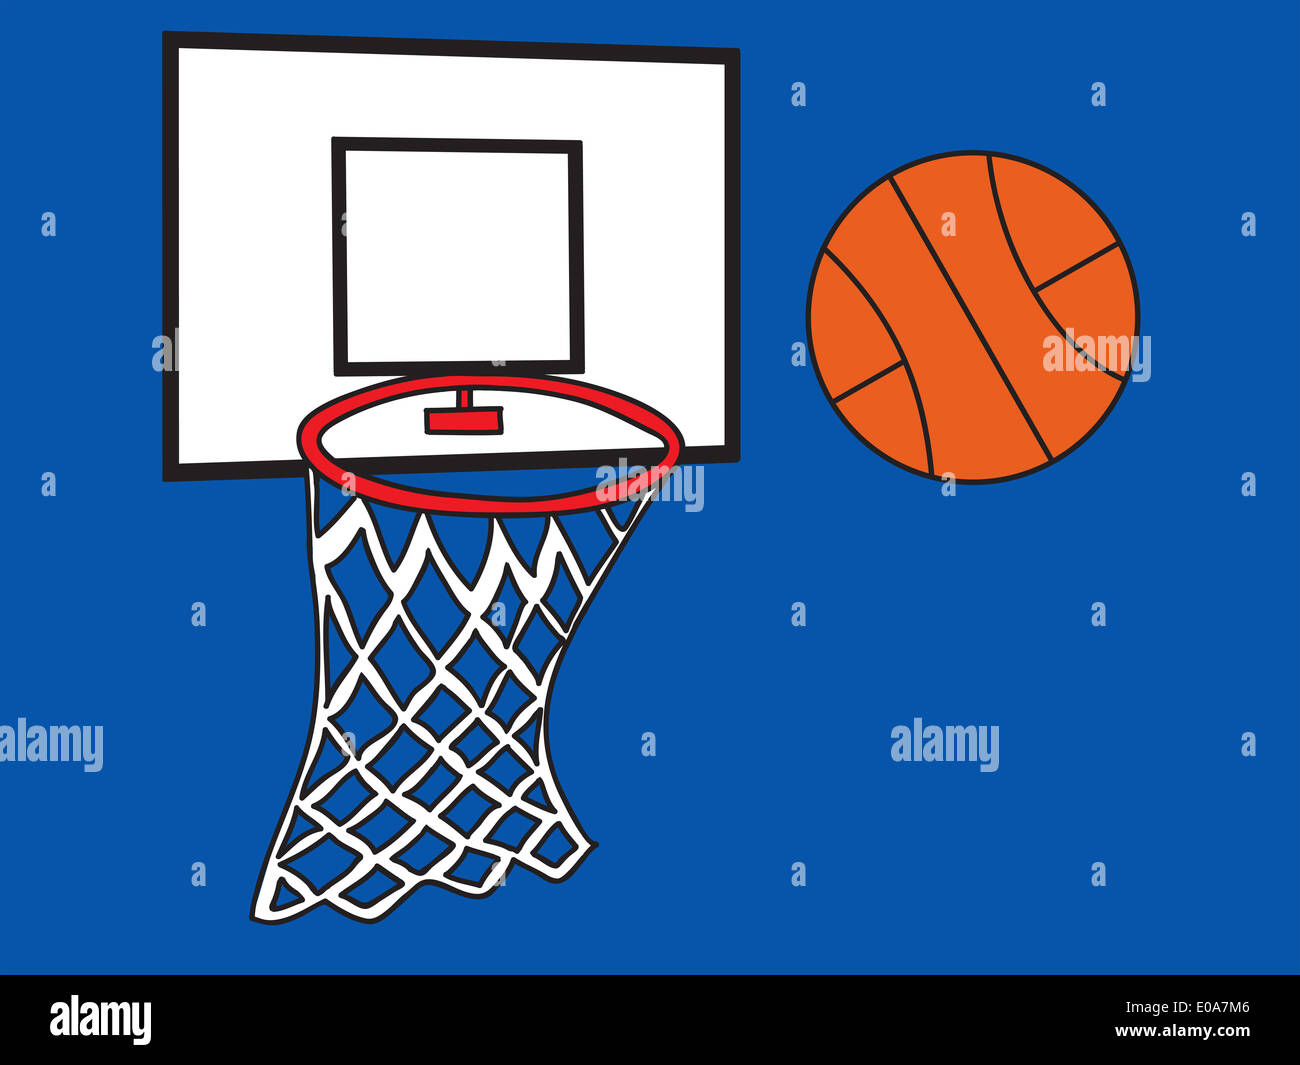 Basketball net and ball illustration Stock Photo